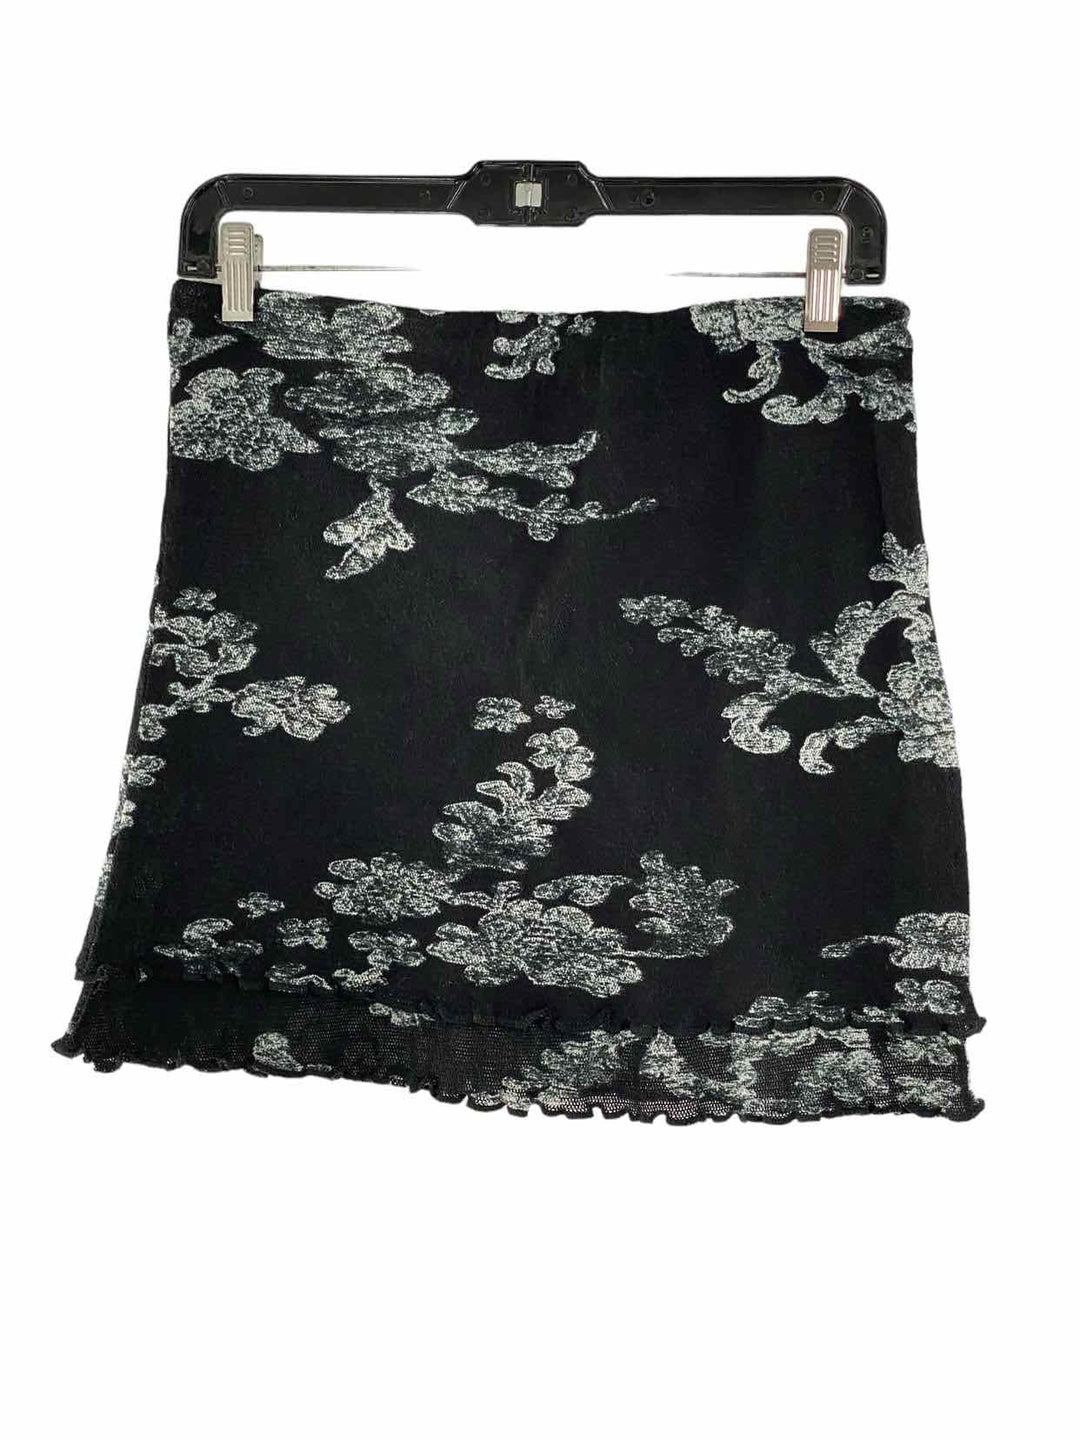 Free People Size S Black White Print Skirt